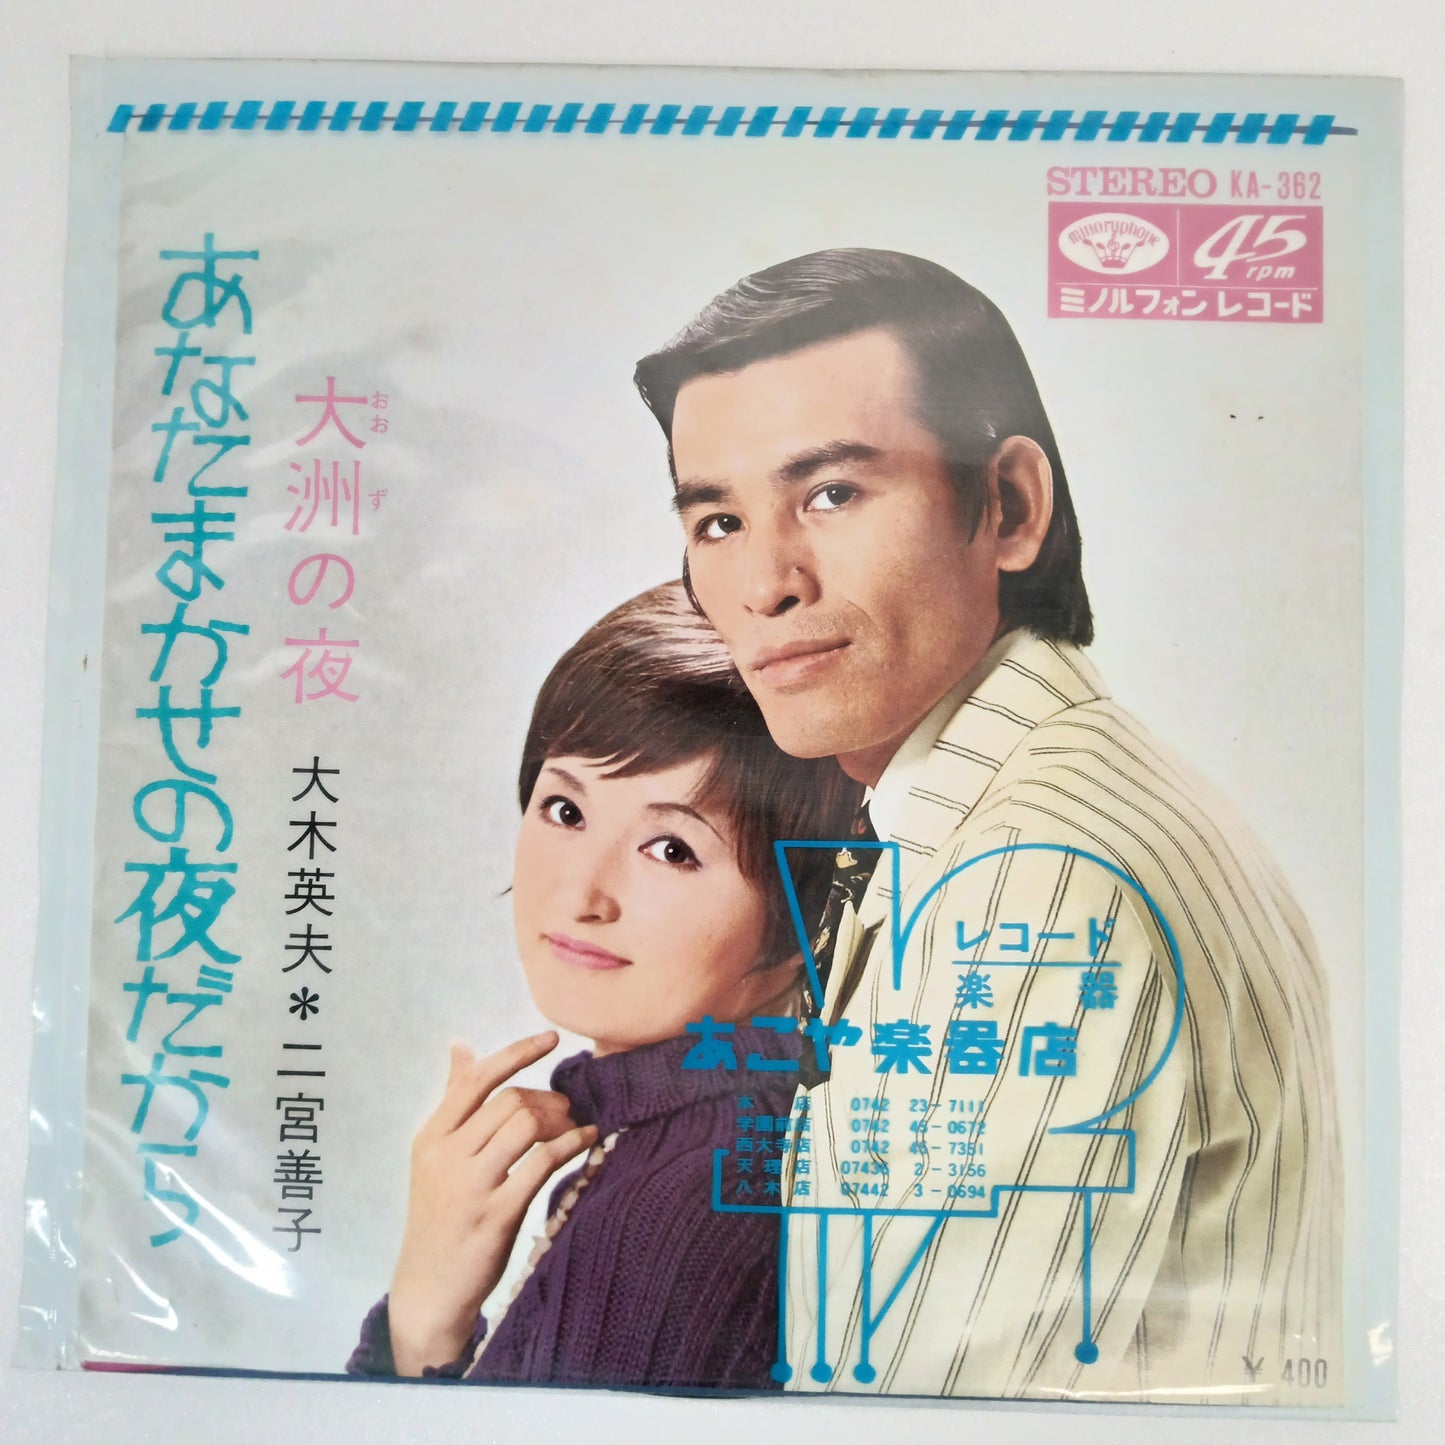 1971 Hideo Oki/Yoshiko Ninomiya B: Night in Ozu Japanese record vintage